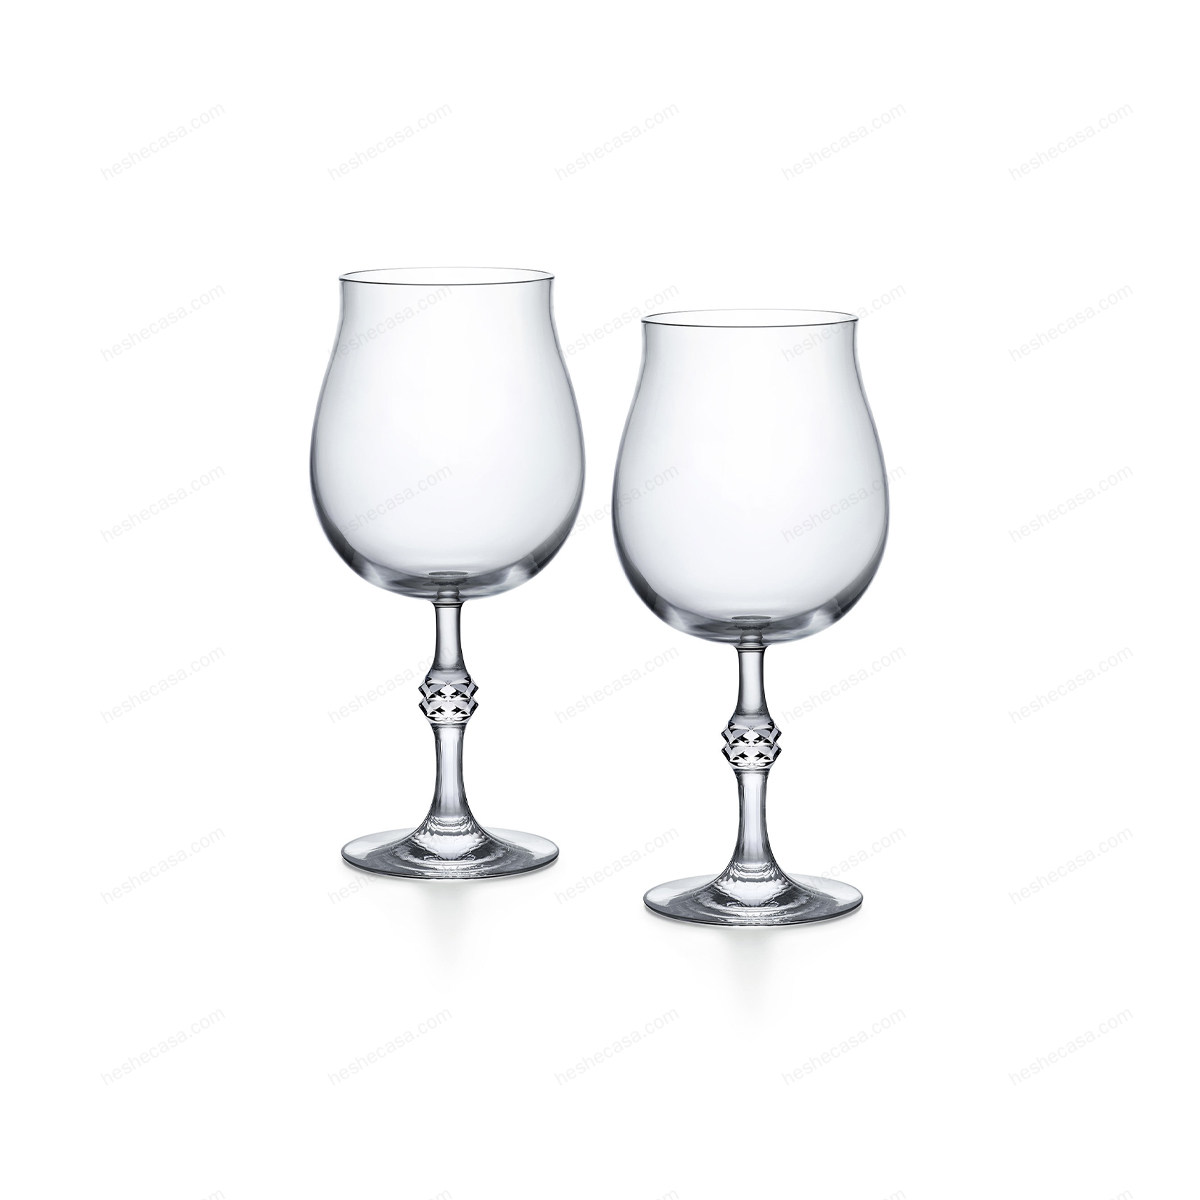 Jcb Passion Wine Glass 酒杯套装